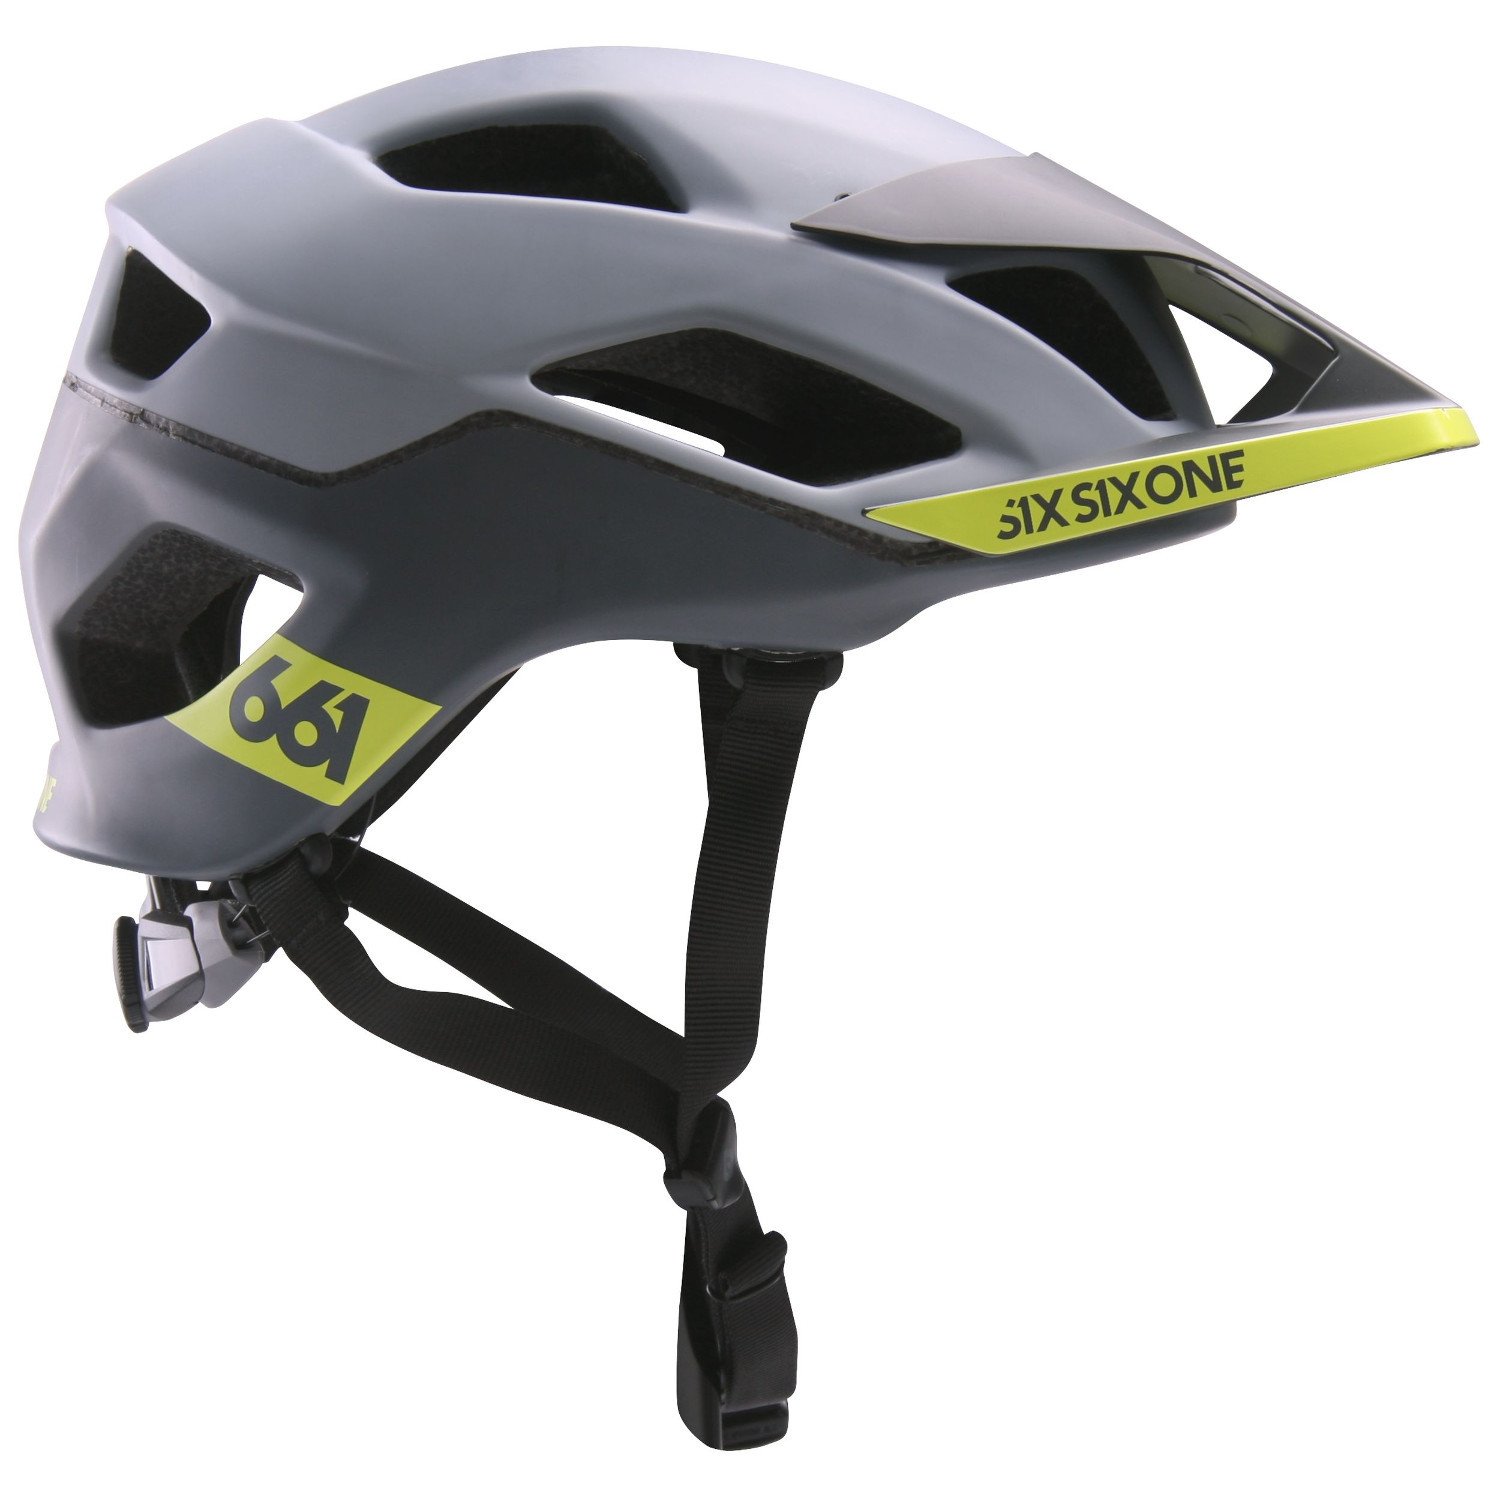 SixSixOne Enduro-MTB Helmet Evo AM Patrol Matte Grey